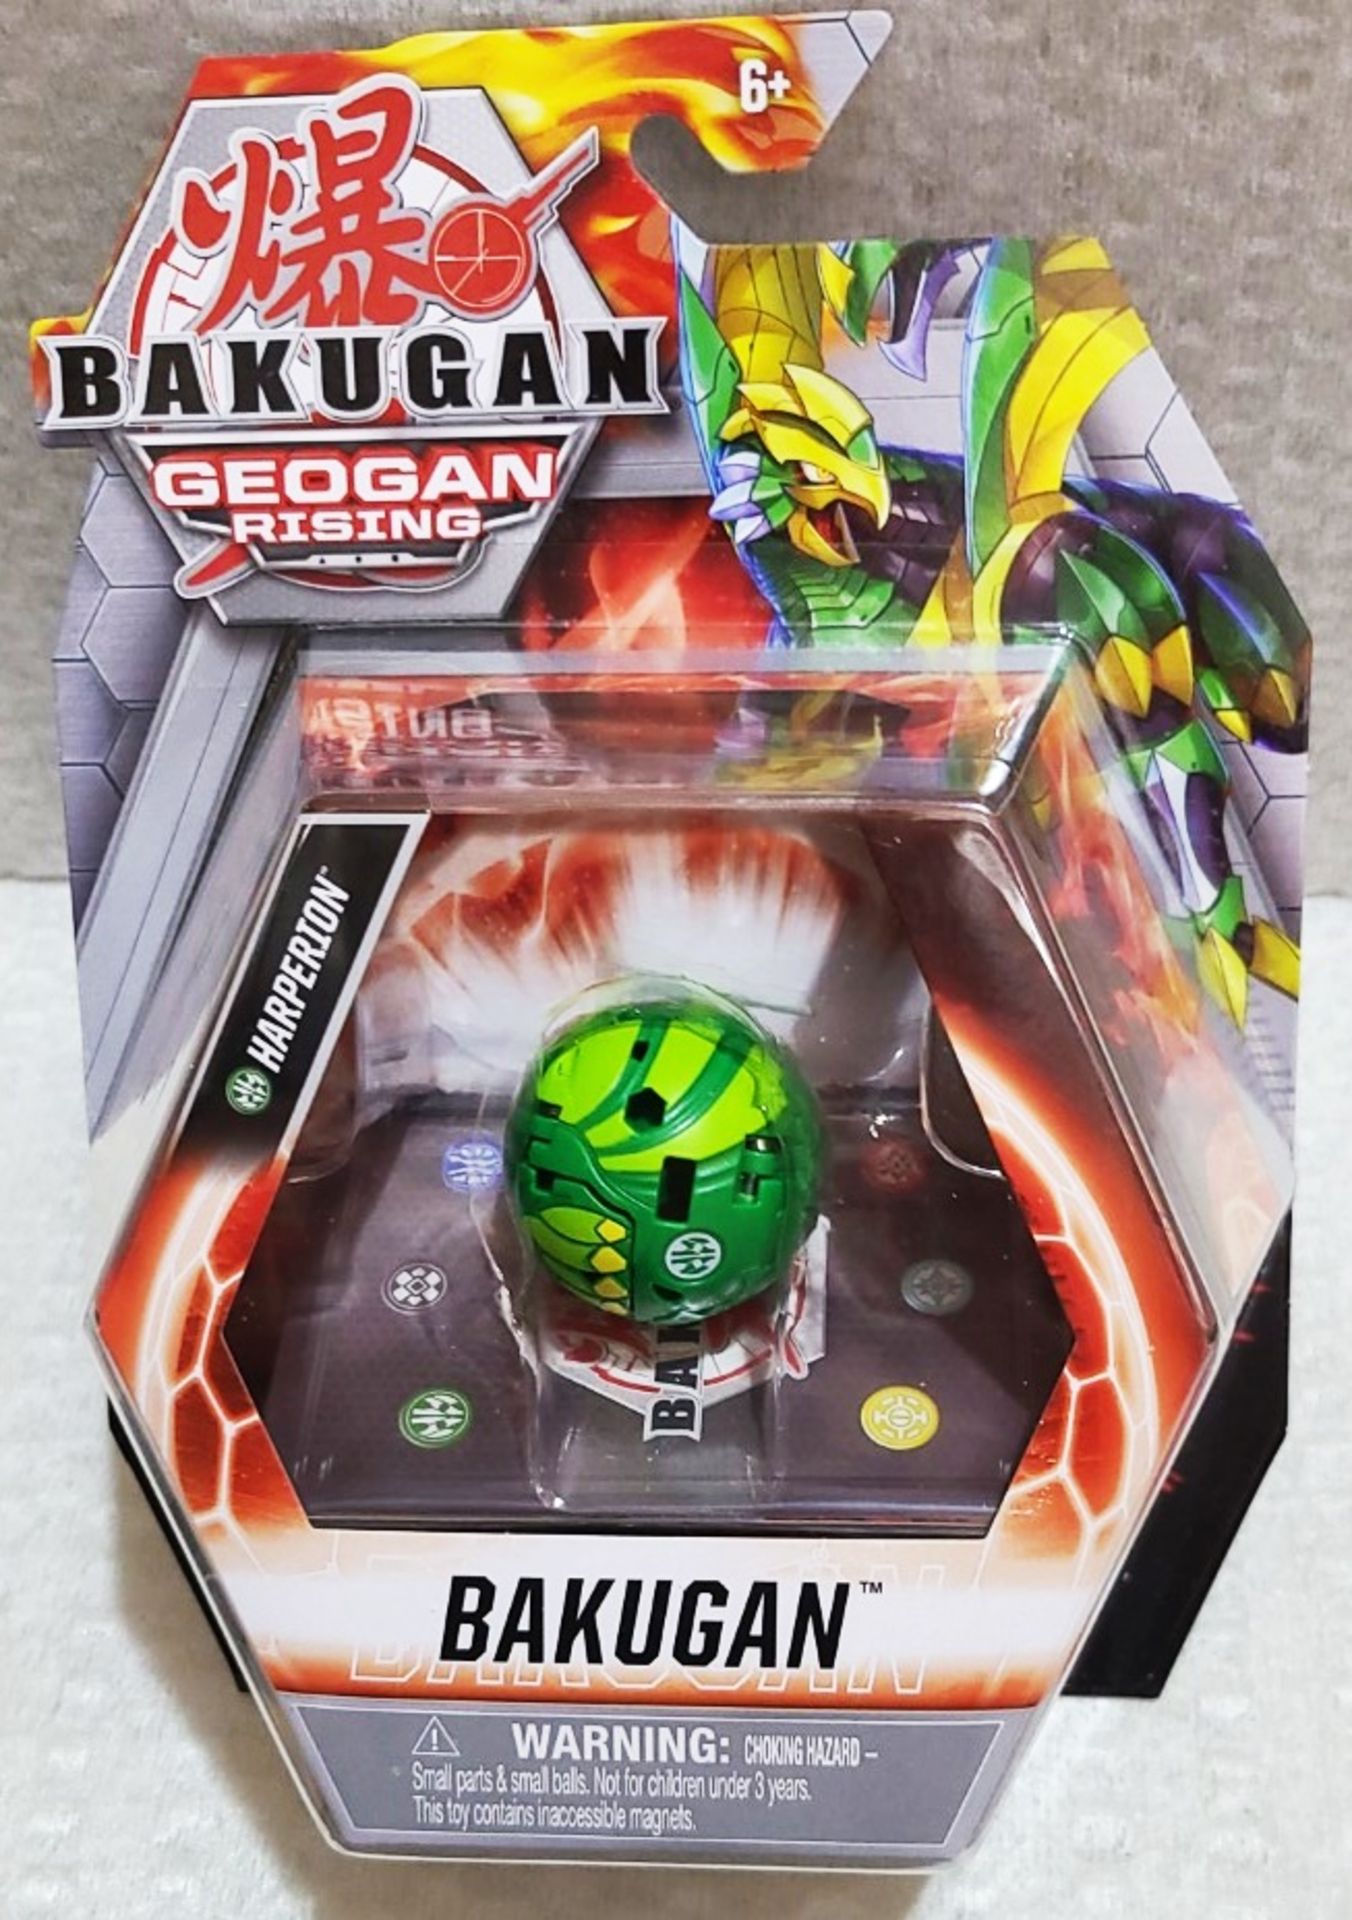 4 x BAKUGAN Bakugan Geogan Rising - Core Collectible Action Figures - Unused Boxed Stock - Ref: - Image 5 of 9